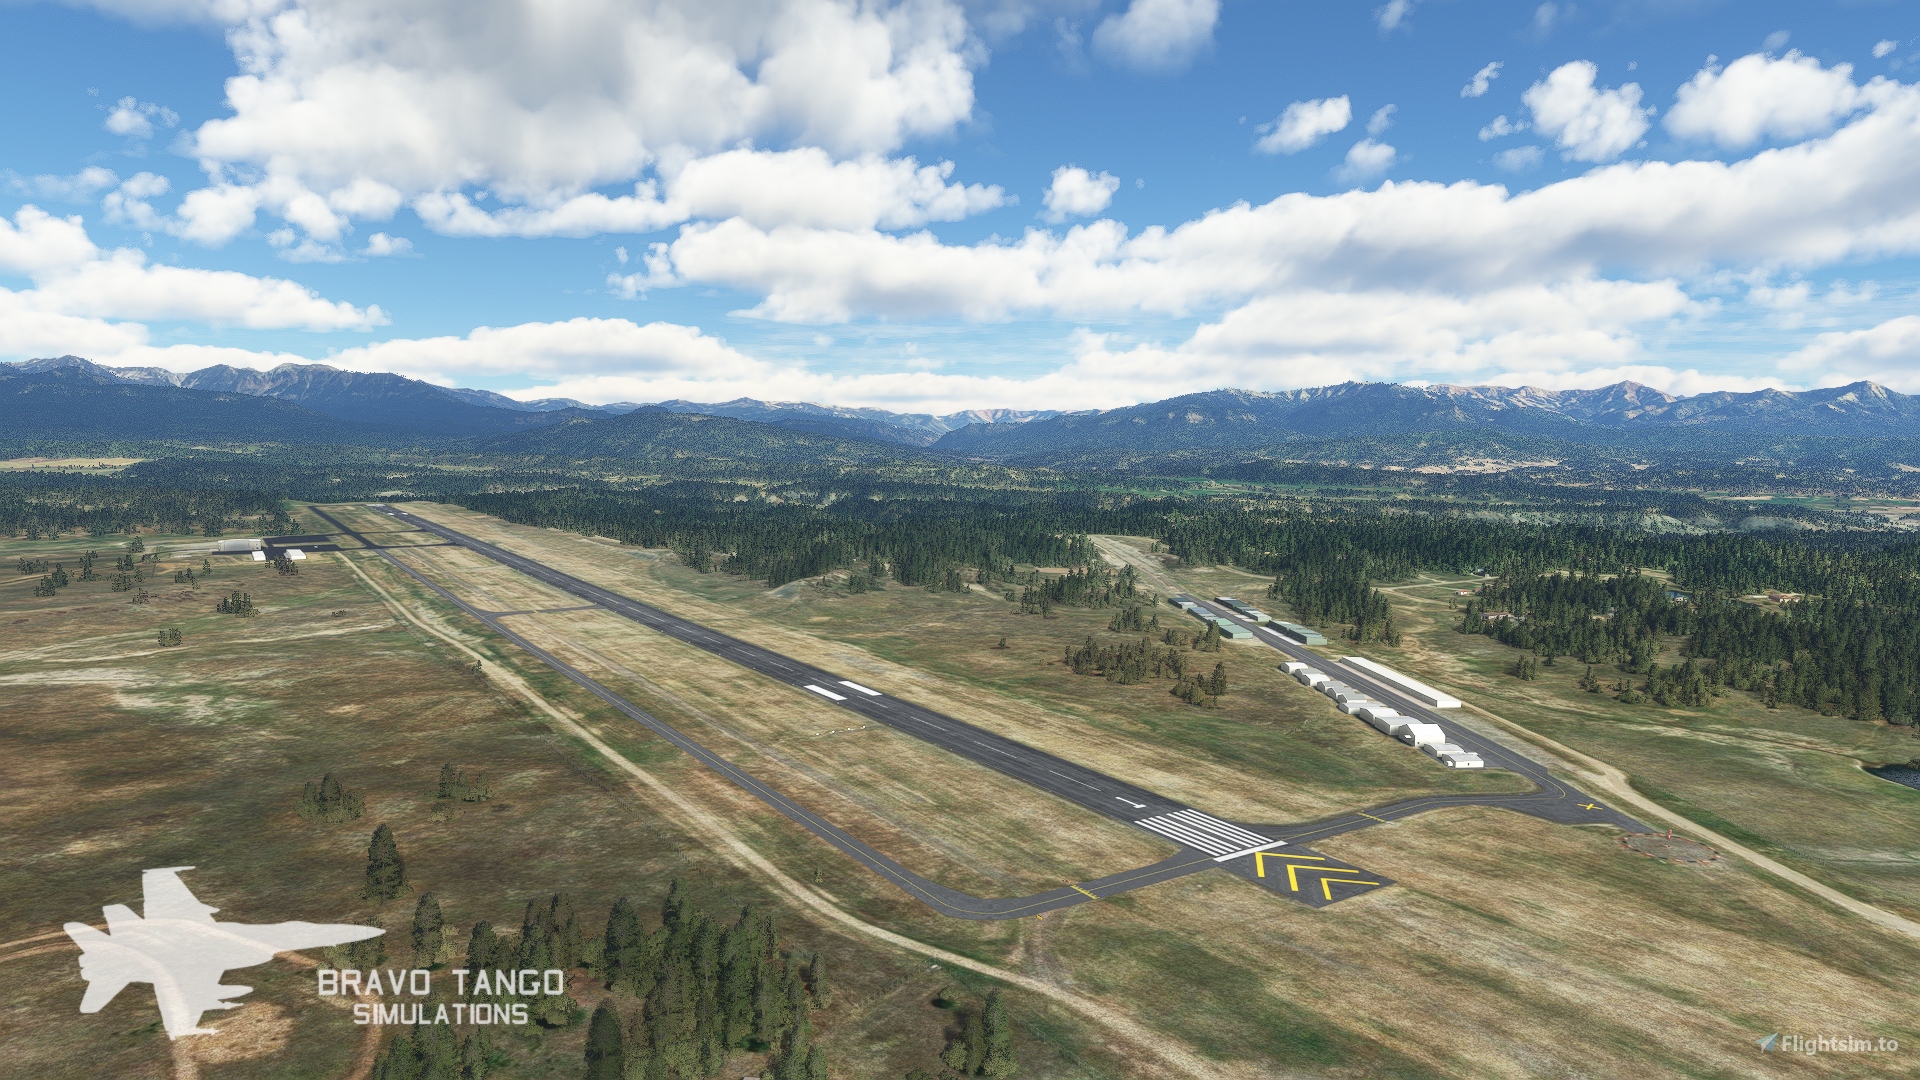 Pagosa Springs Stevens Field (KPSO) for Microsoft Flight Simulator MSFS pic